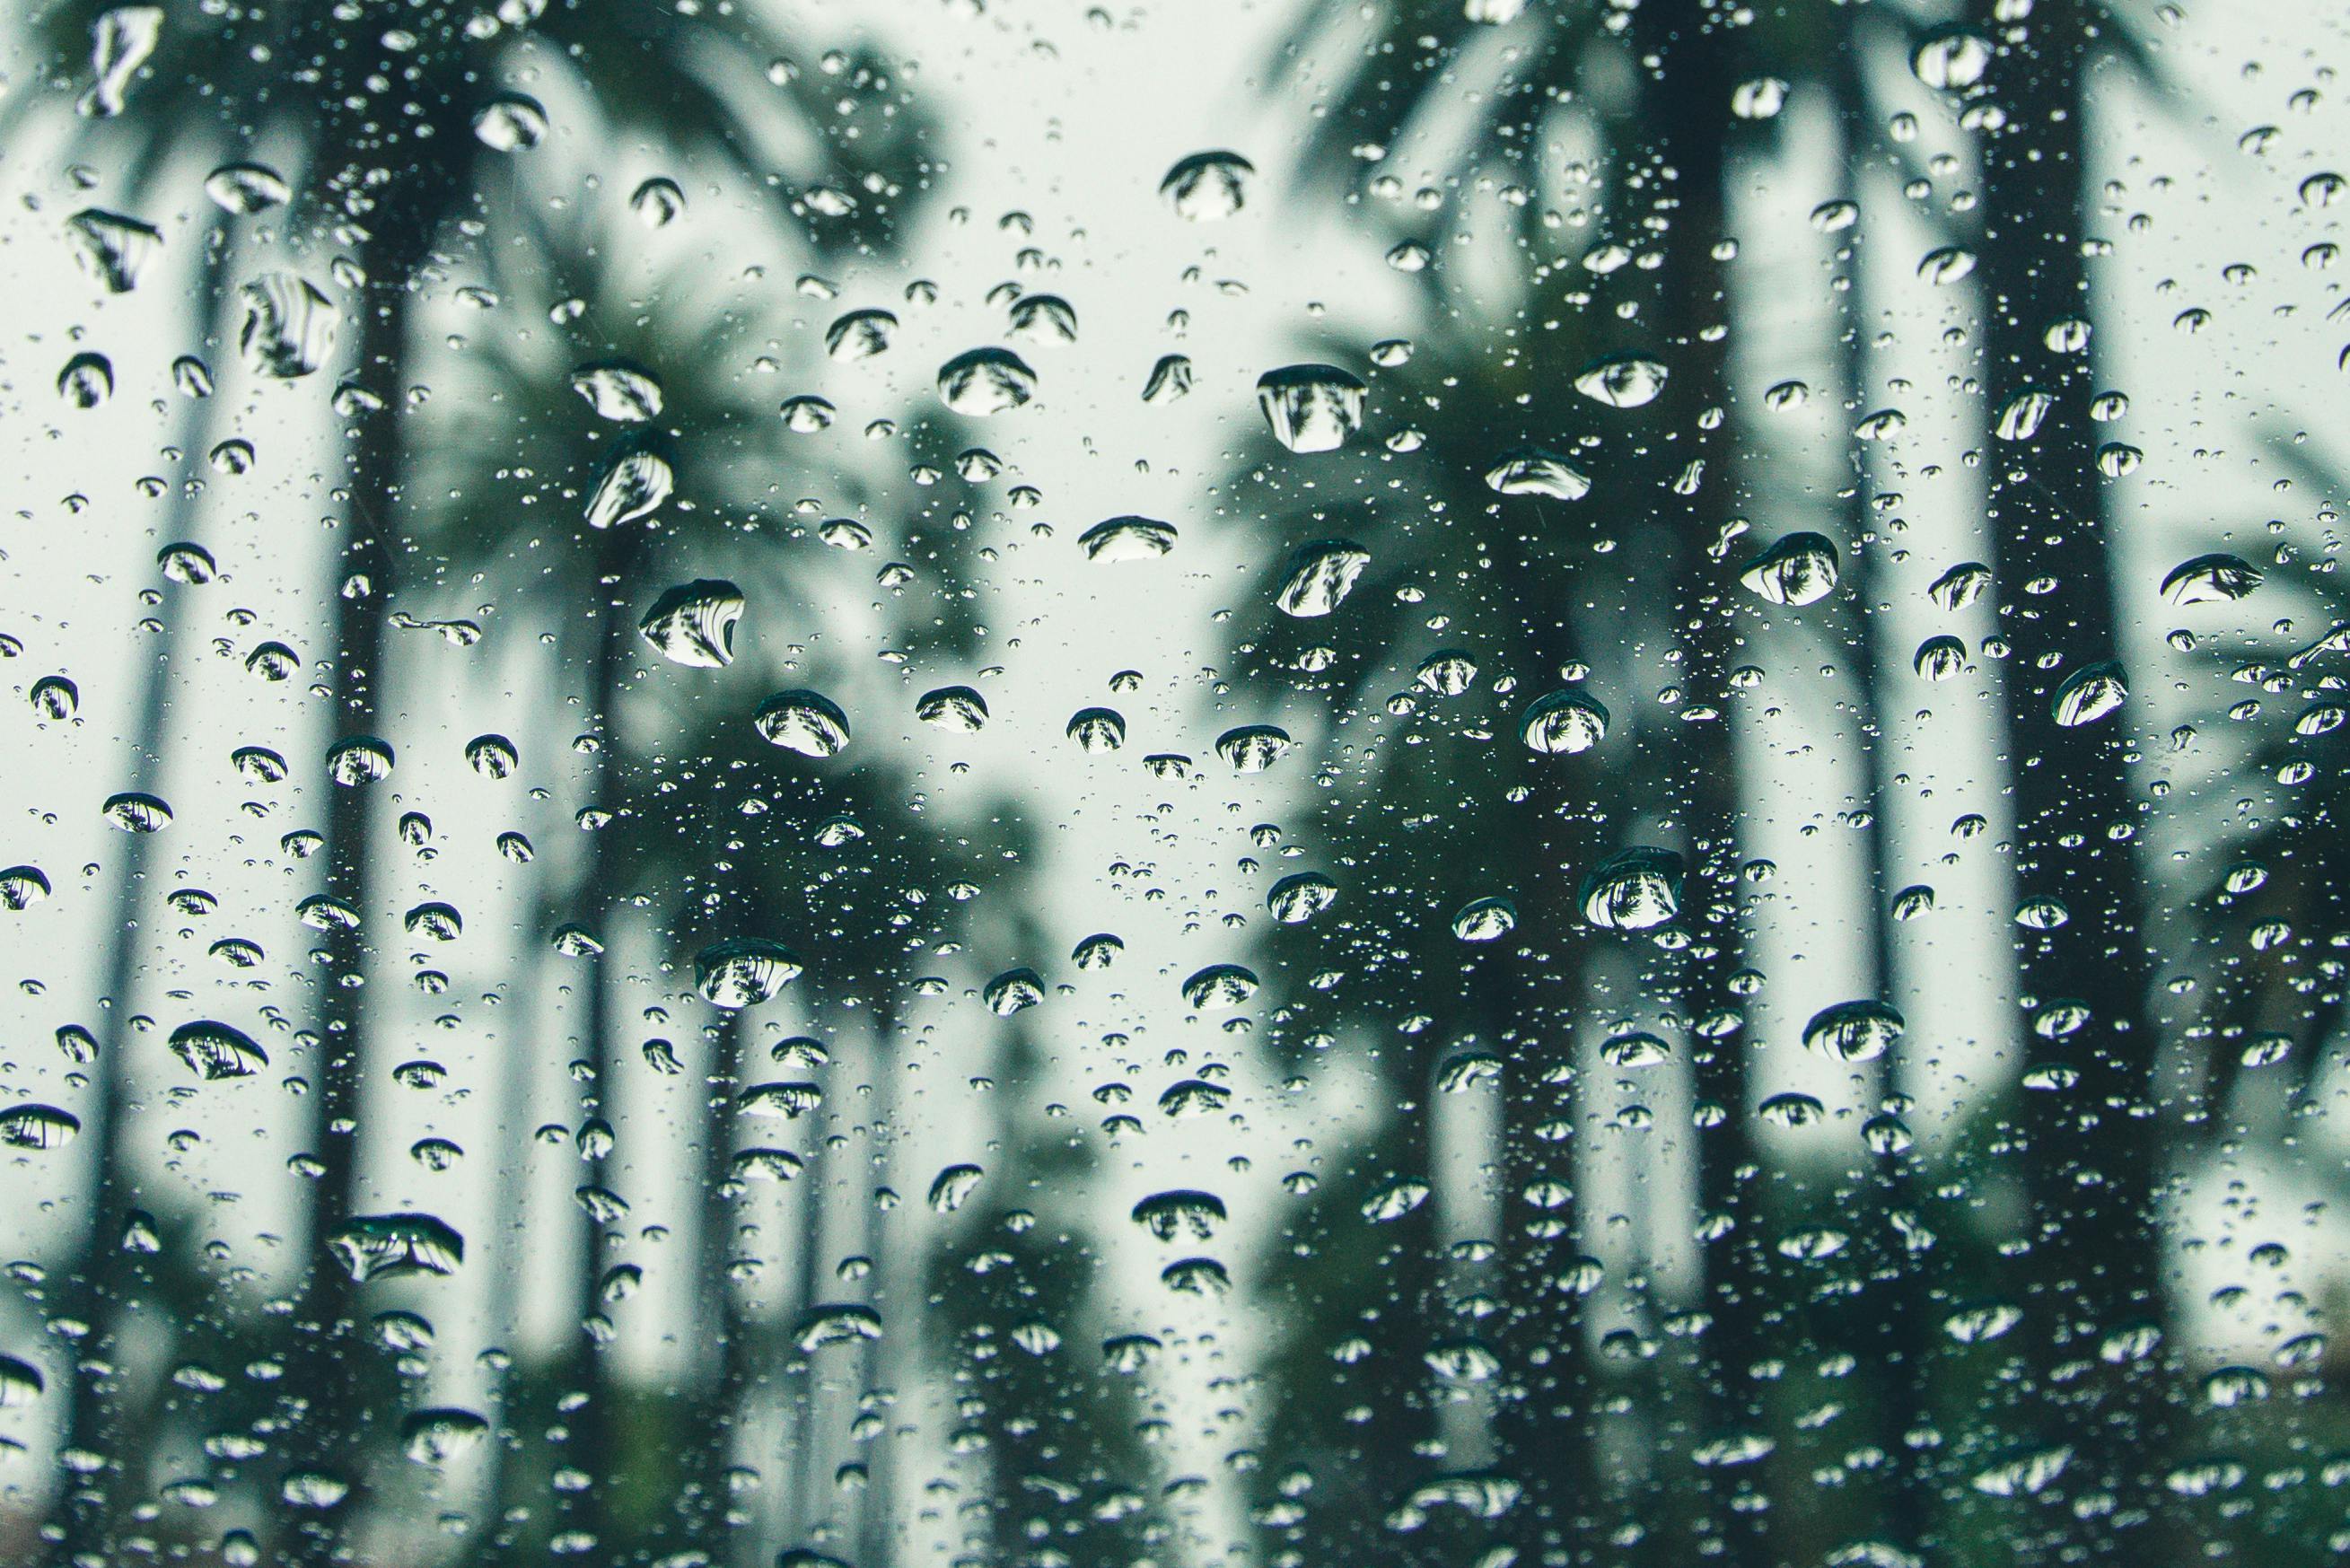 rain photography wallpaper